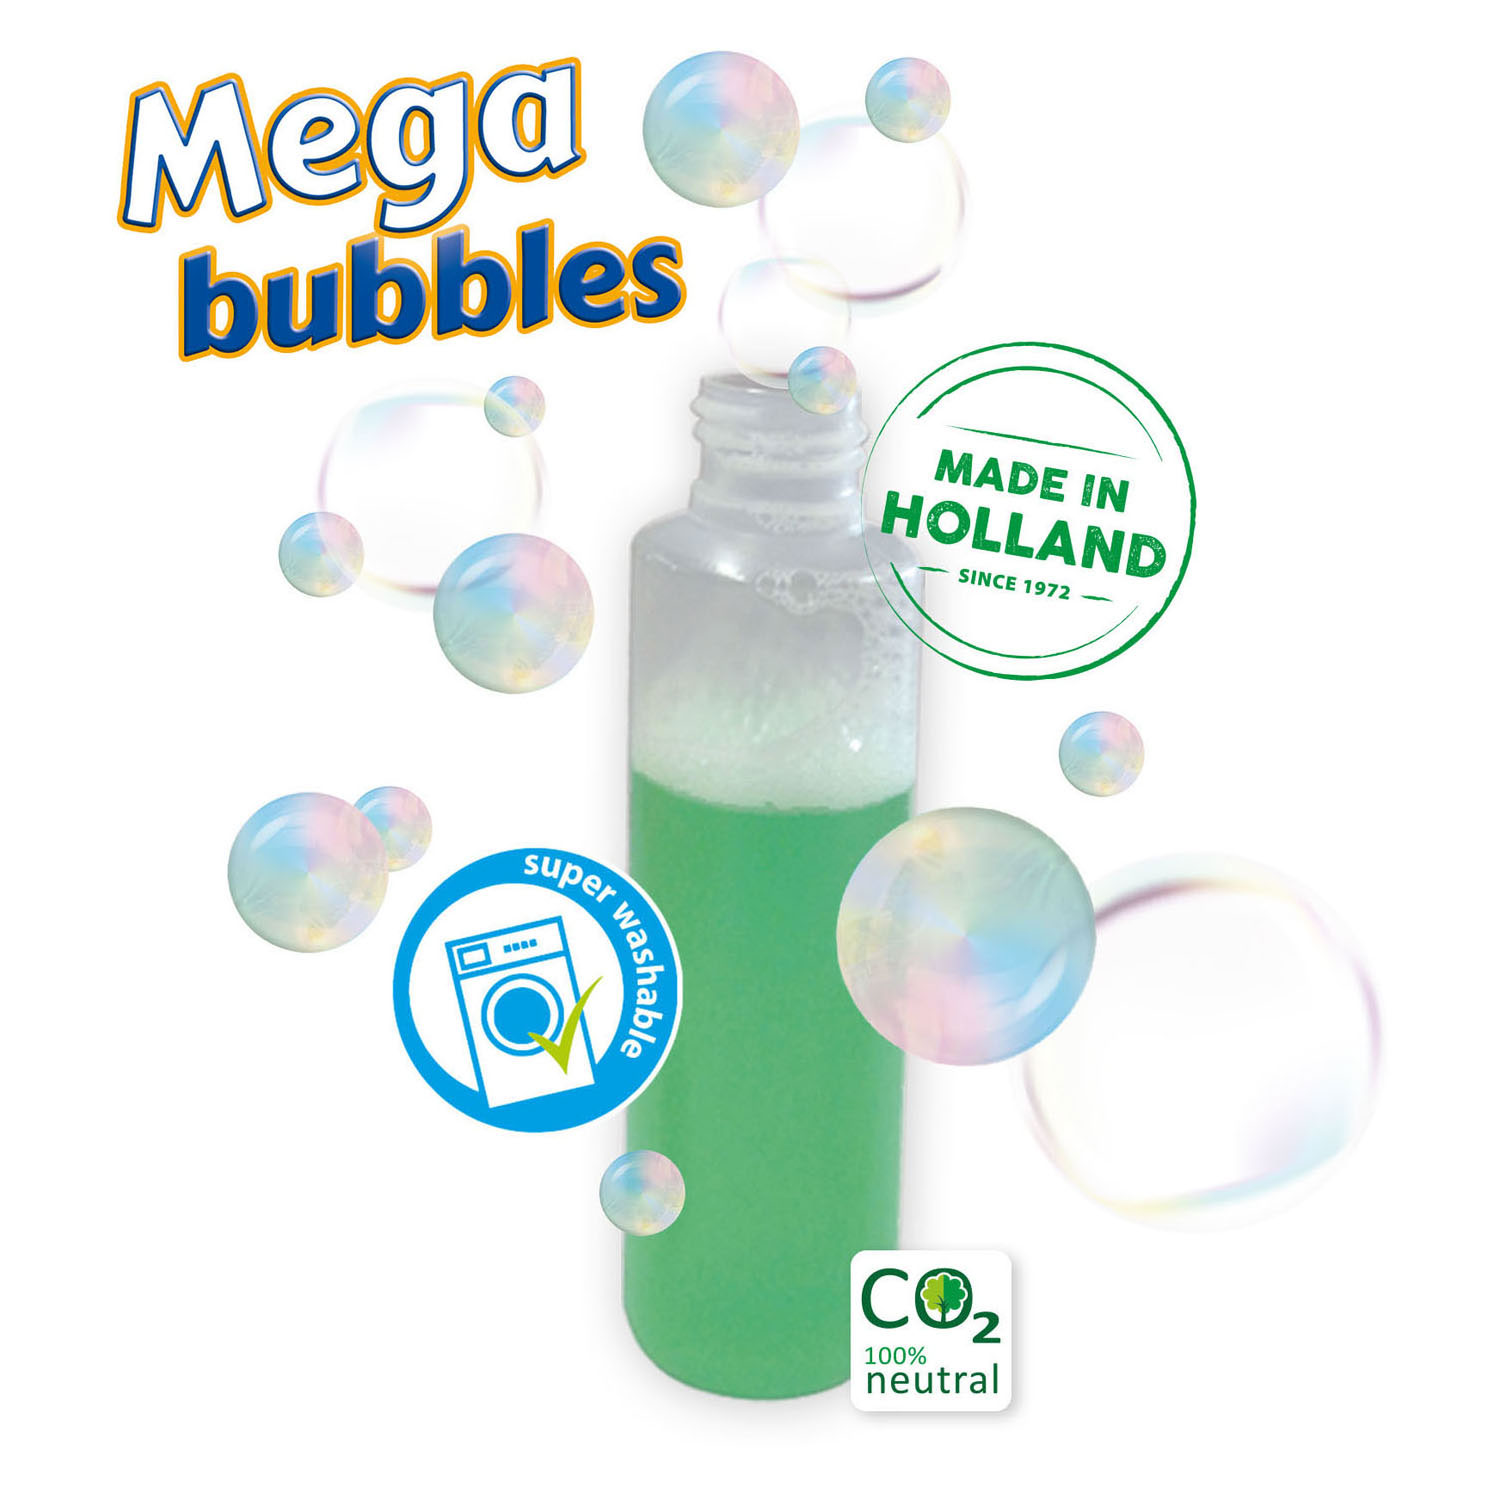 SES Bubble Rocket Seifenblasen